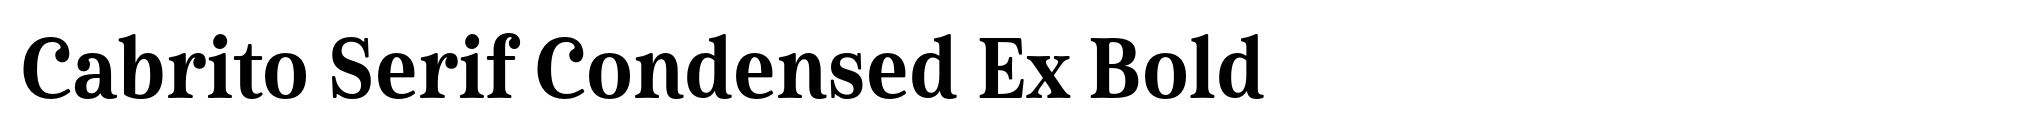 Cabrito Serif Condensed Ex Bold image